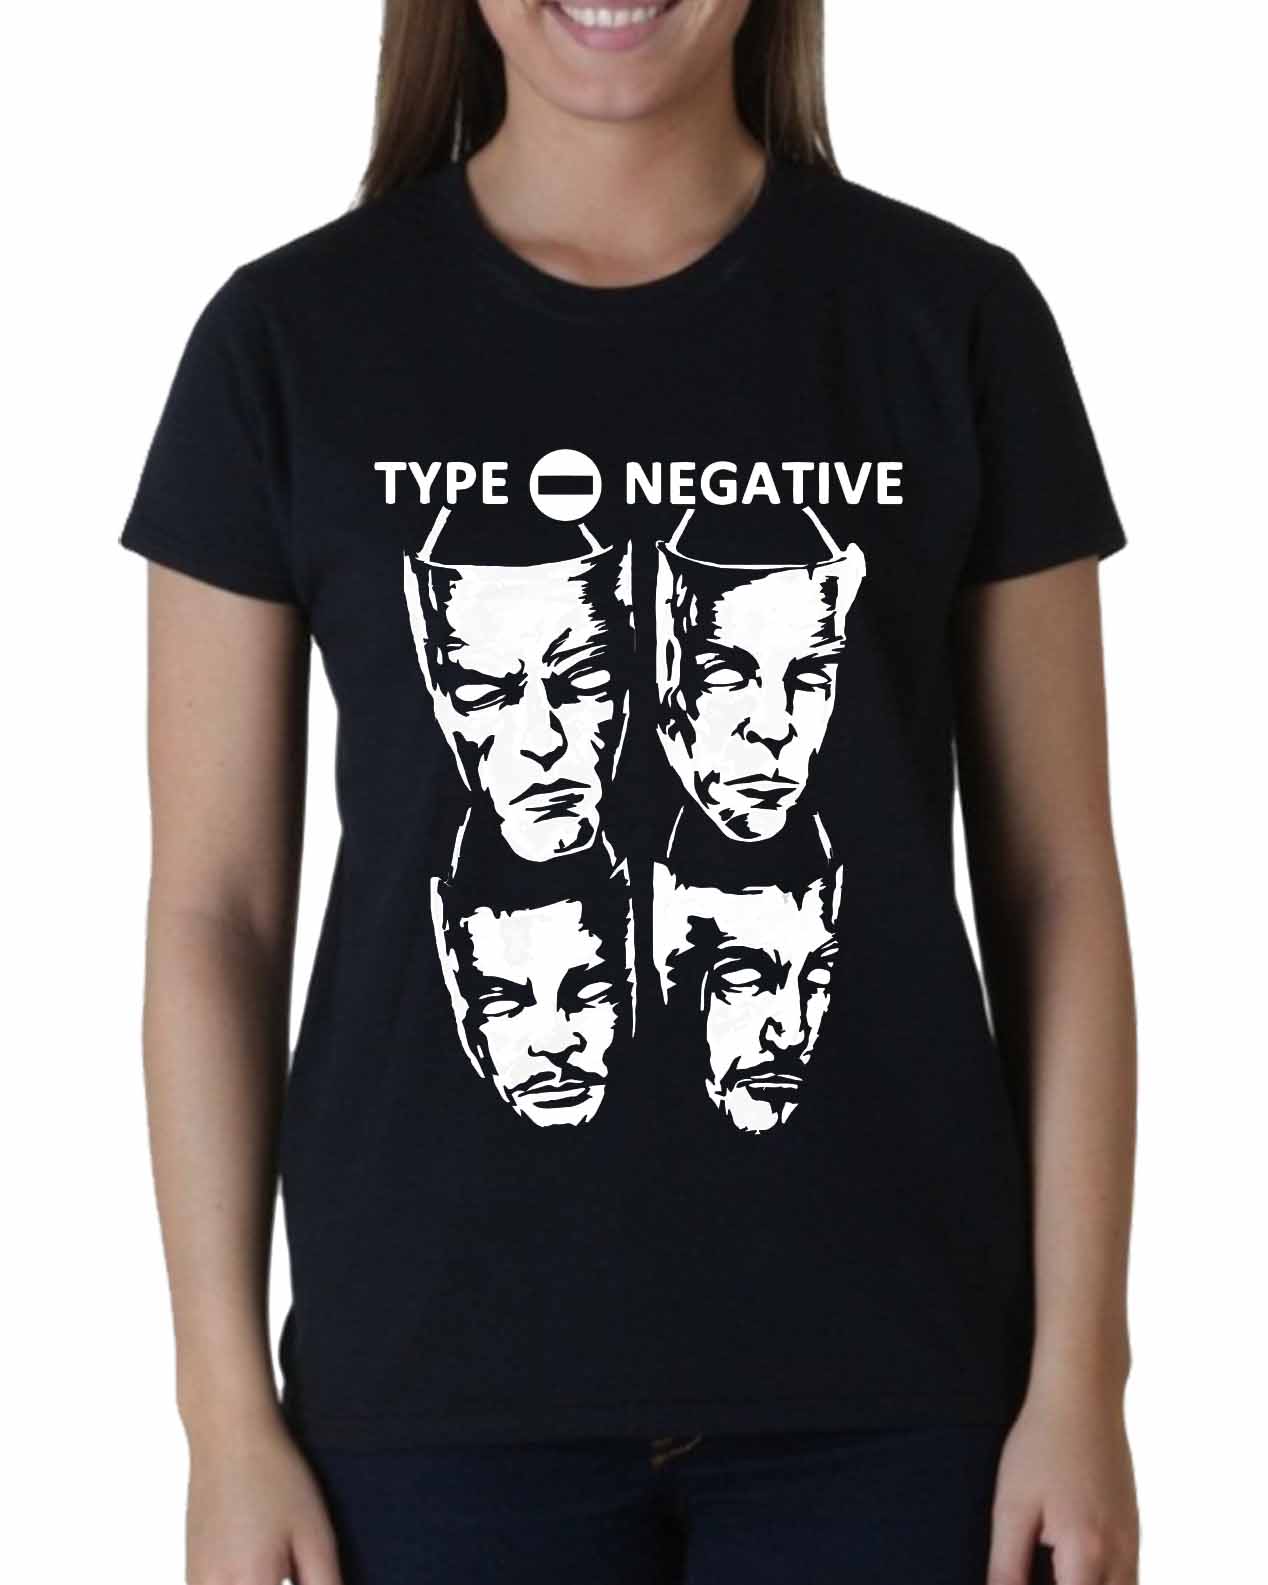 Type O Negative - Masks